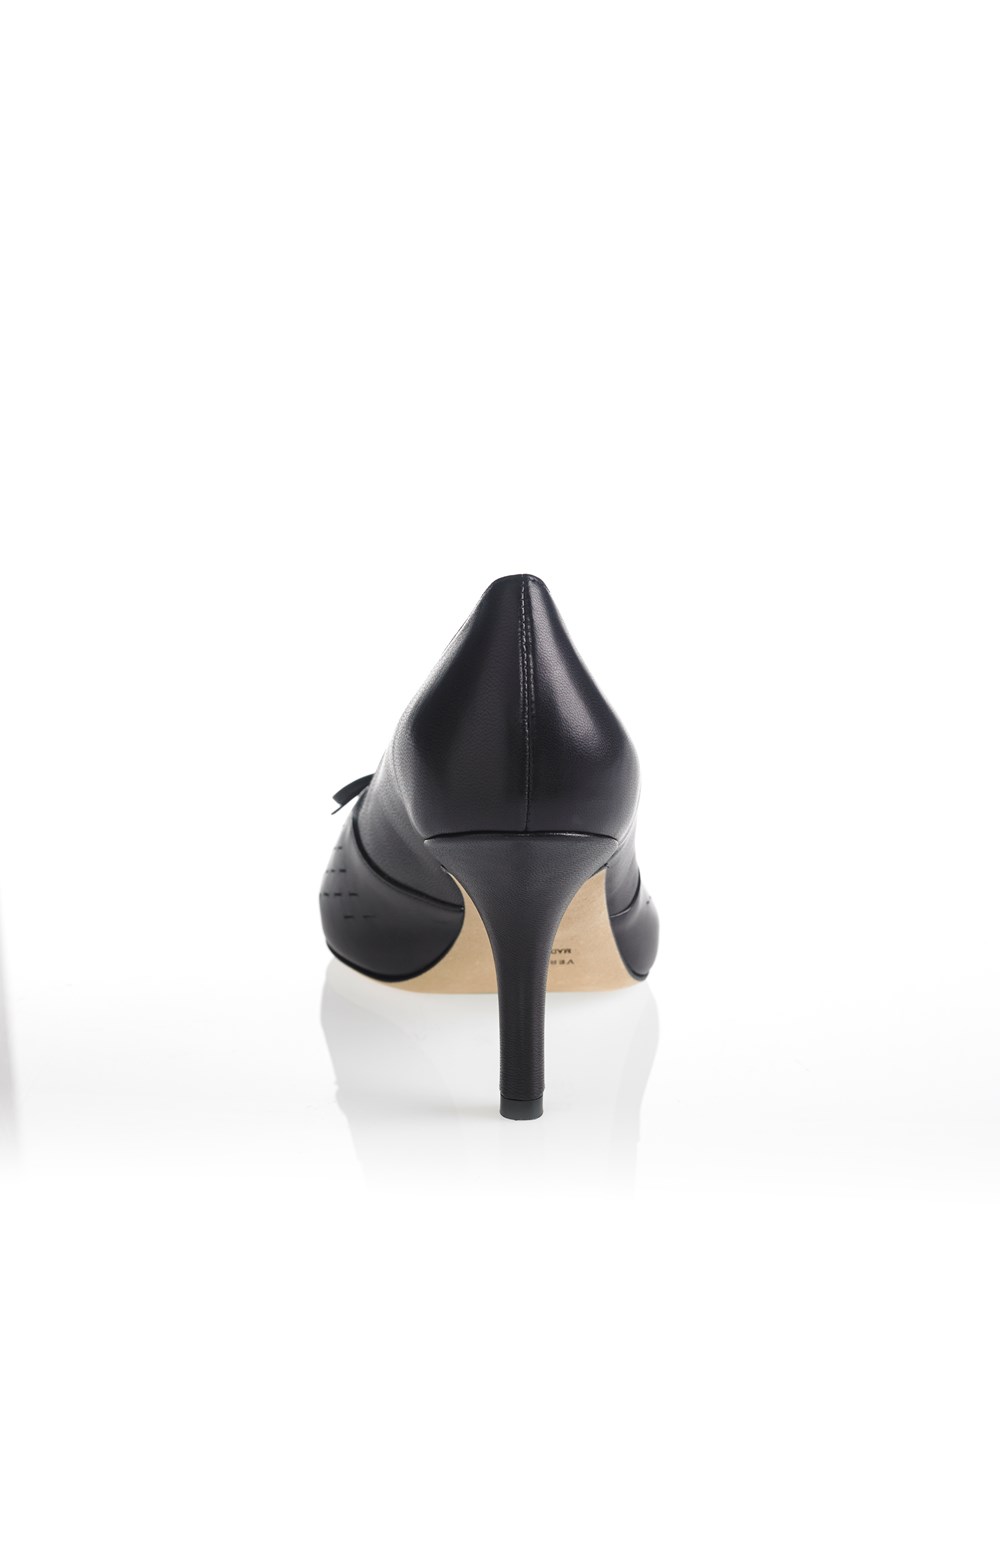 Gracie - comfortable heels - heels for bunions | Julie Lopez Shoes